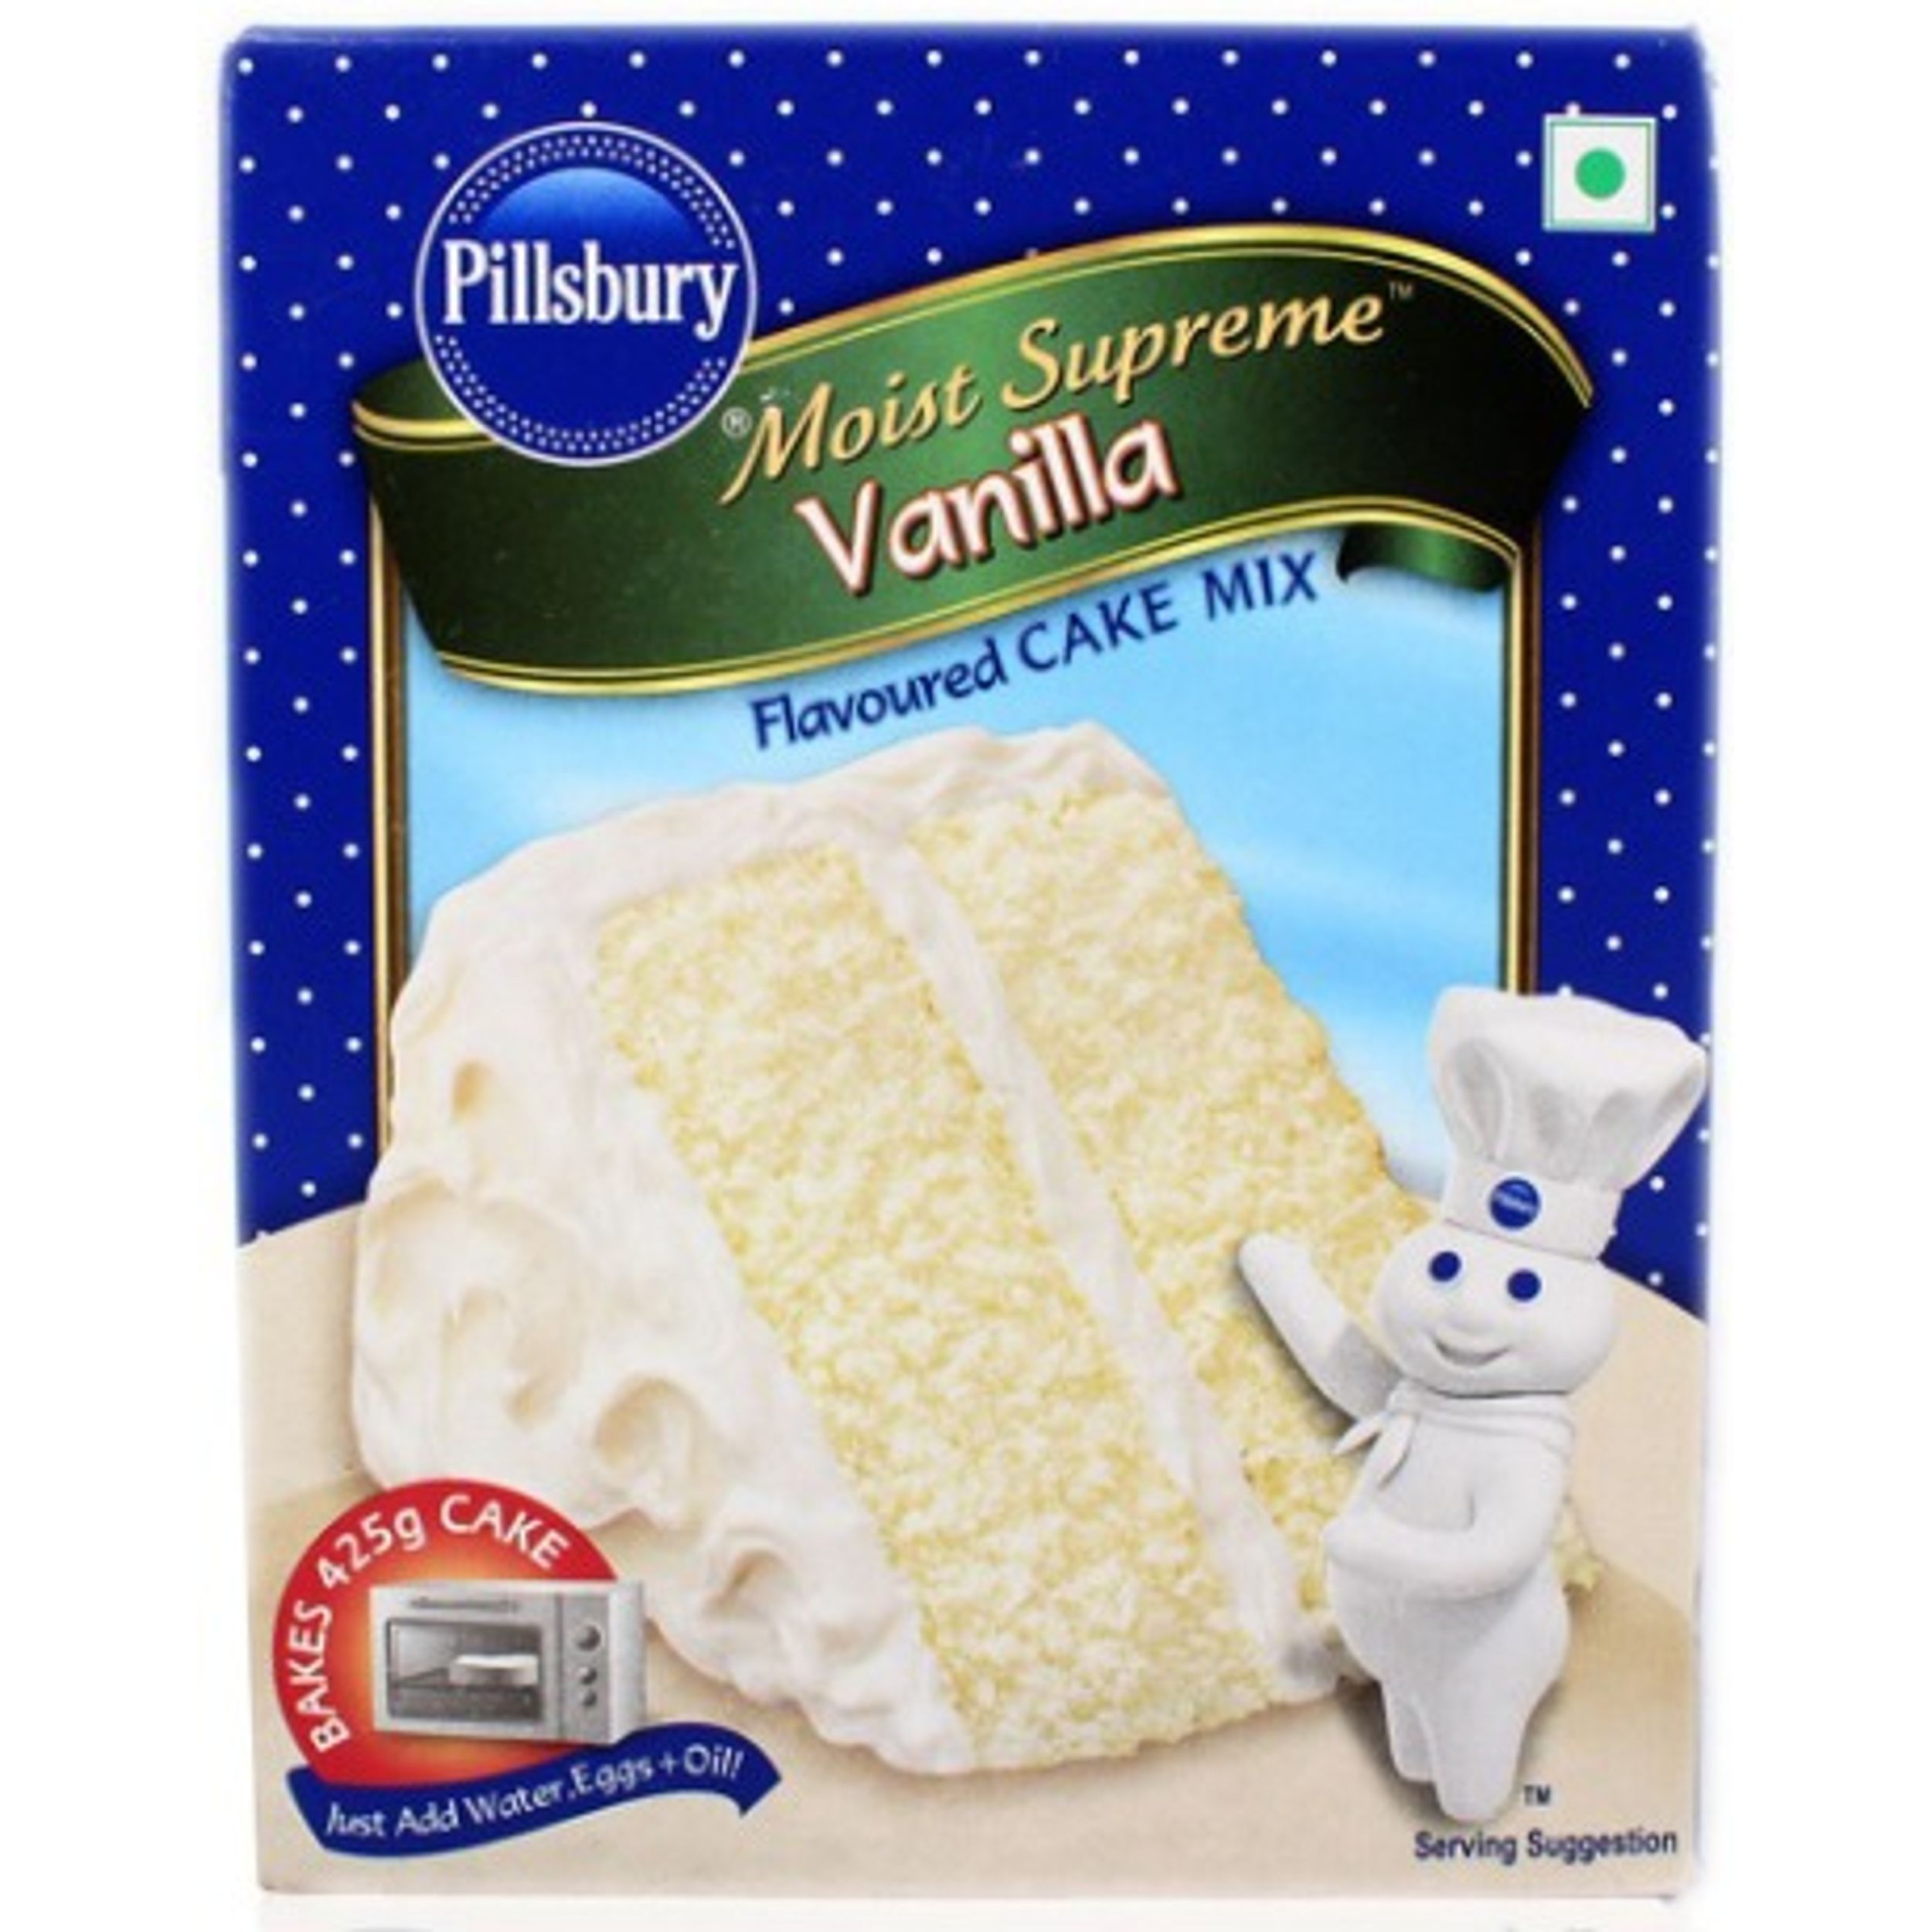 Pillsbury Vanilla Cooker Cake Mix Price - Buy Online at ₹122 in India